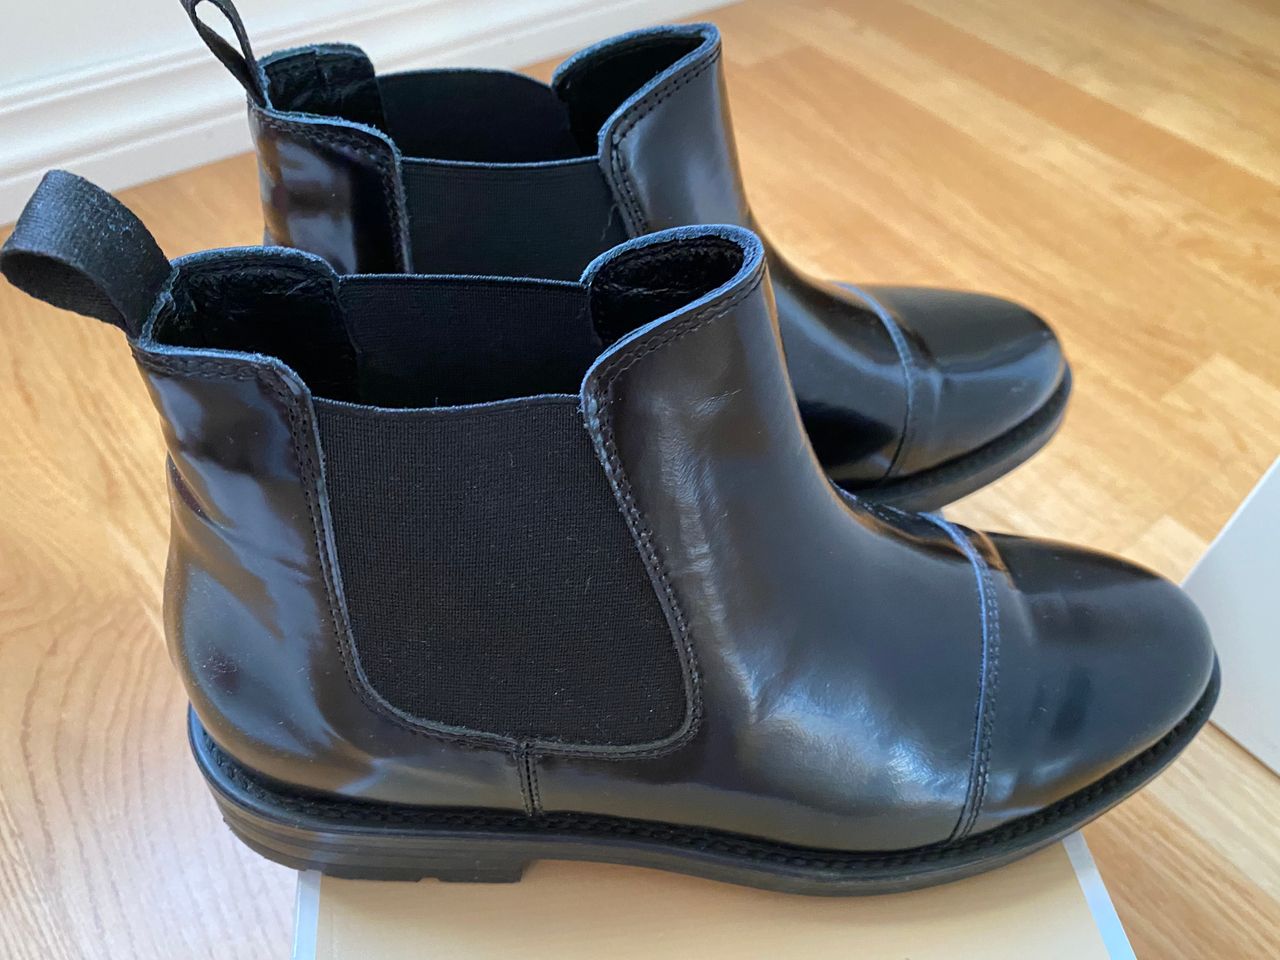 John White Moccamocca Oxford Mens Shoes Size 41/8 Article U3411-2516 Black  | eBay